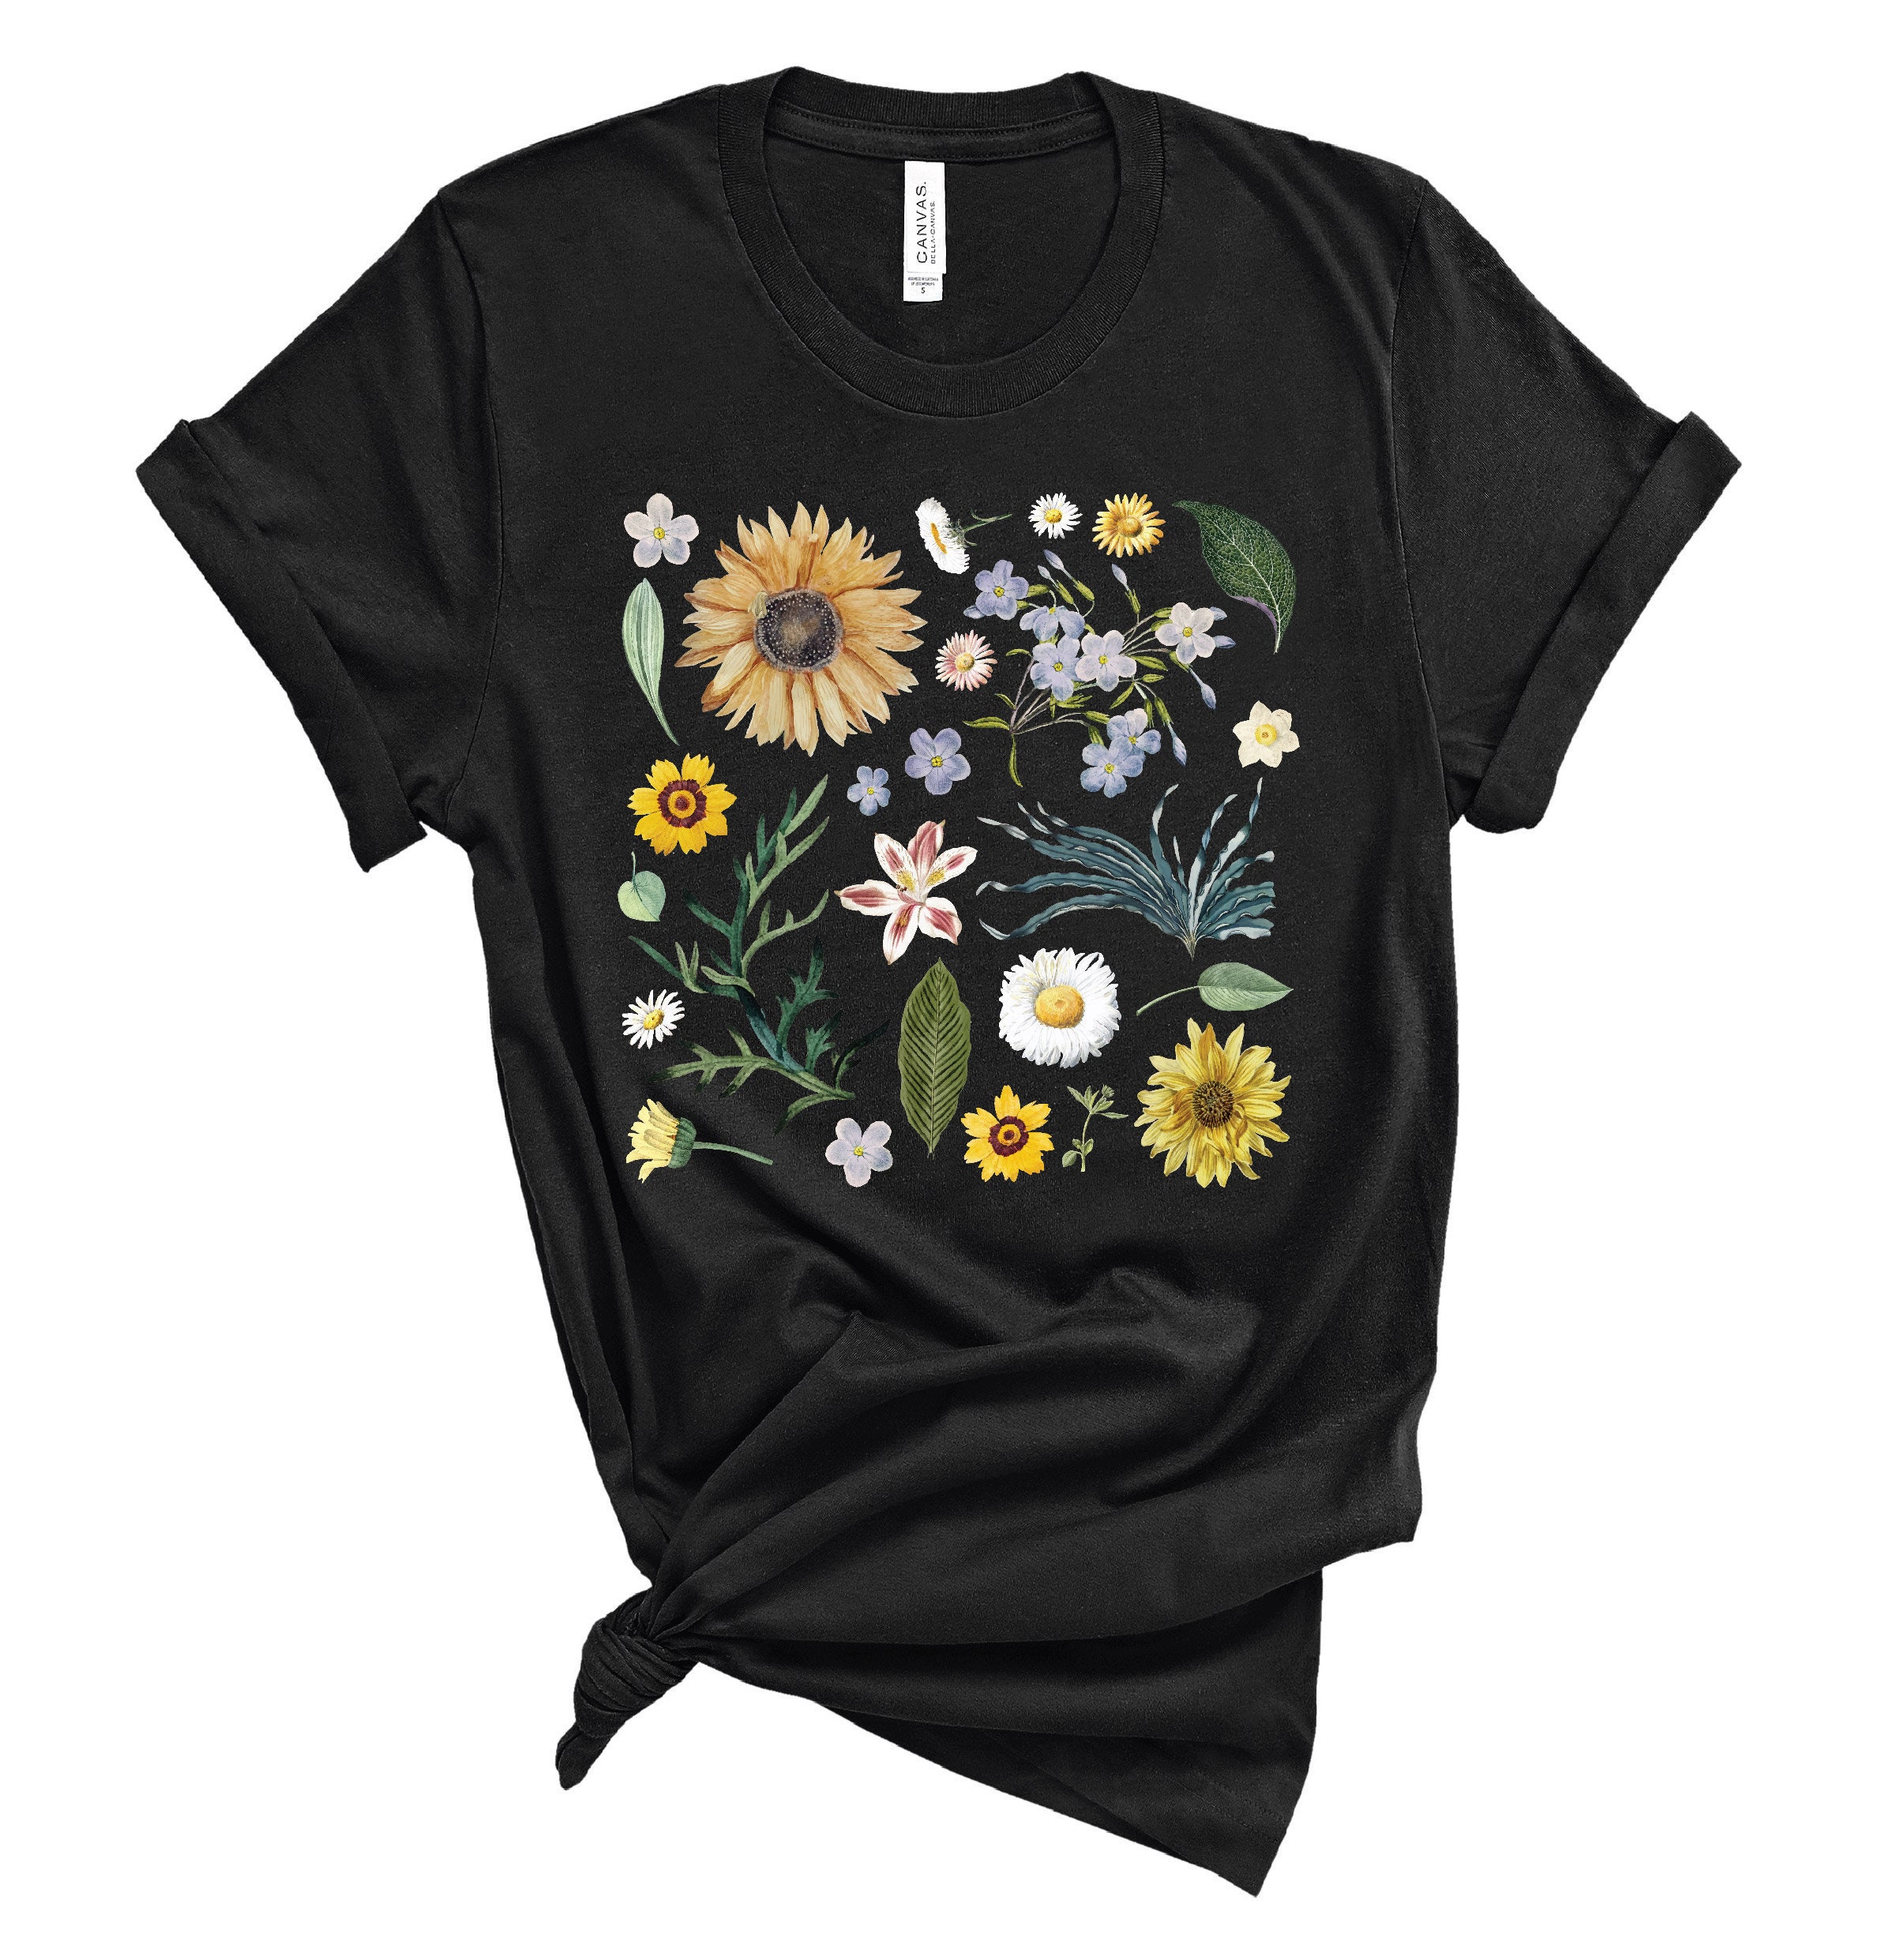 Vintage Inspired Floral Tee Botanical Shirt Flower T Shirt Etsy